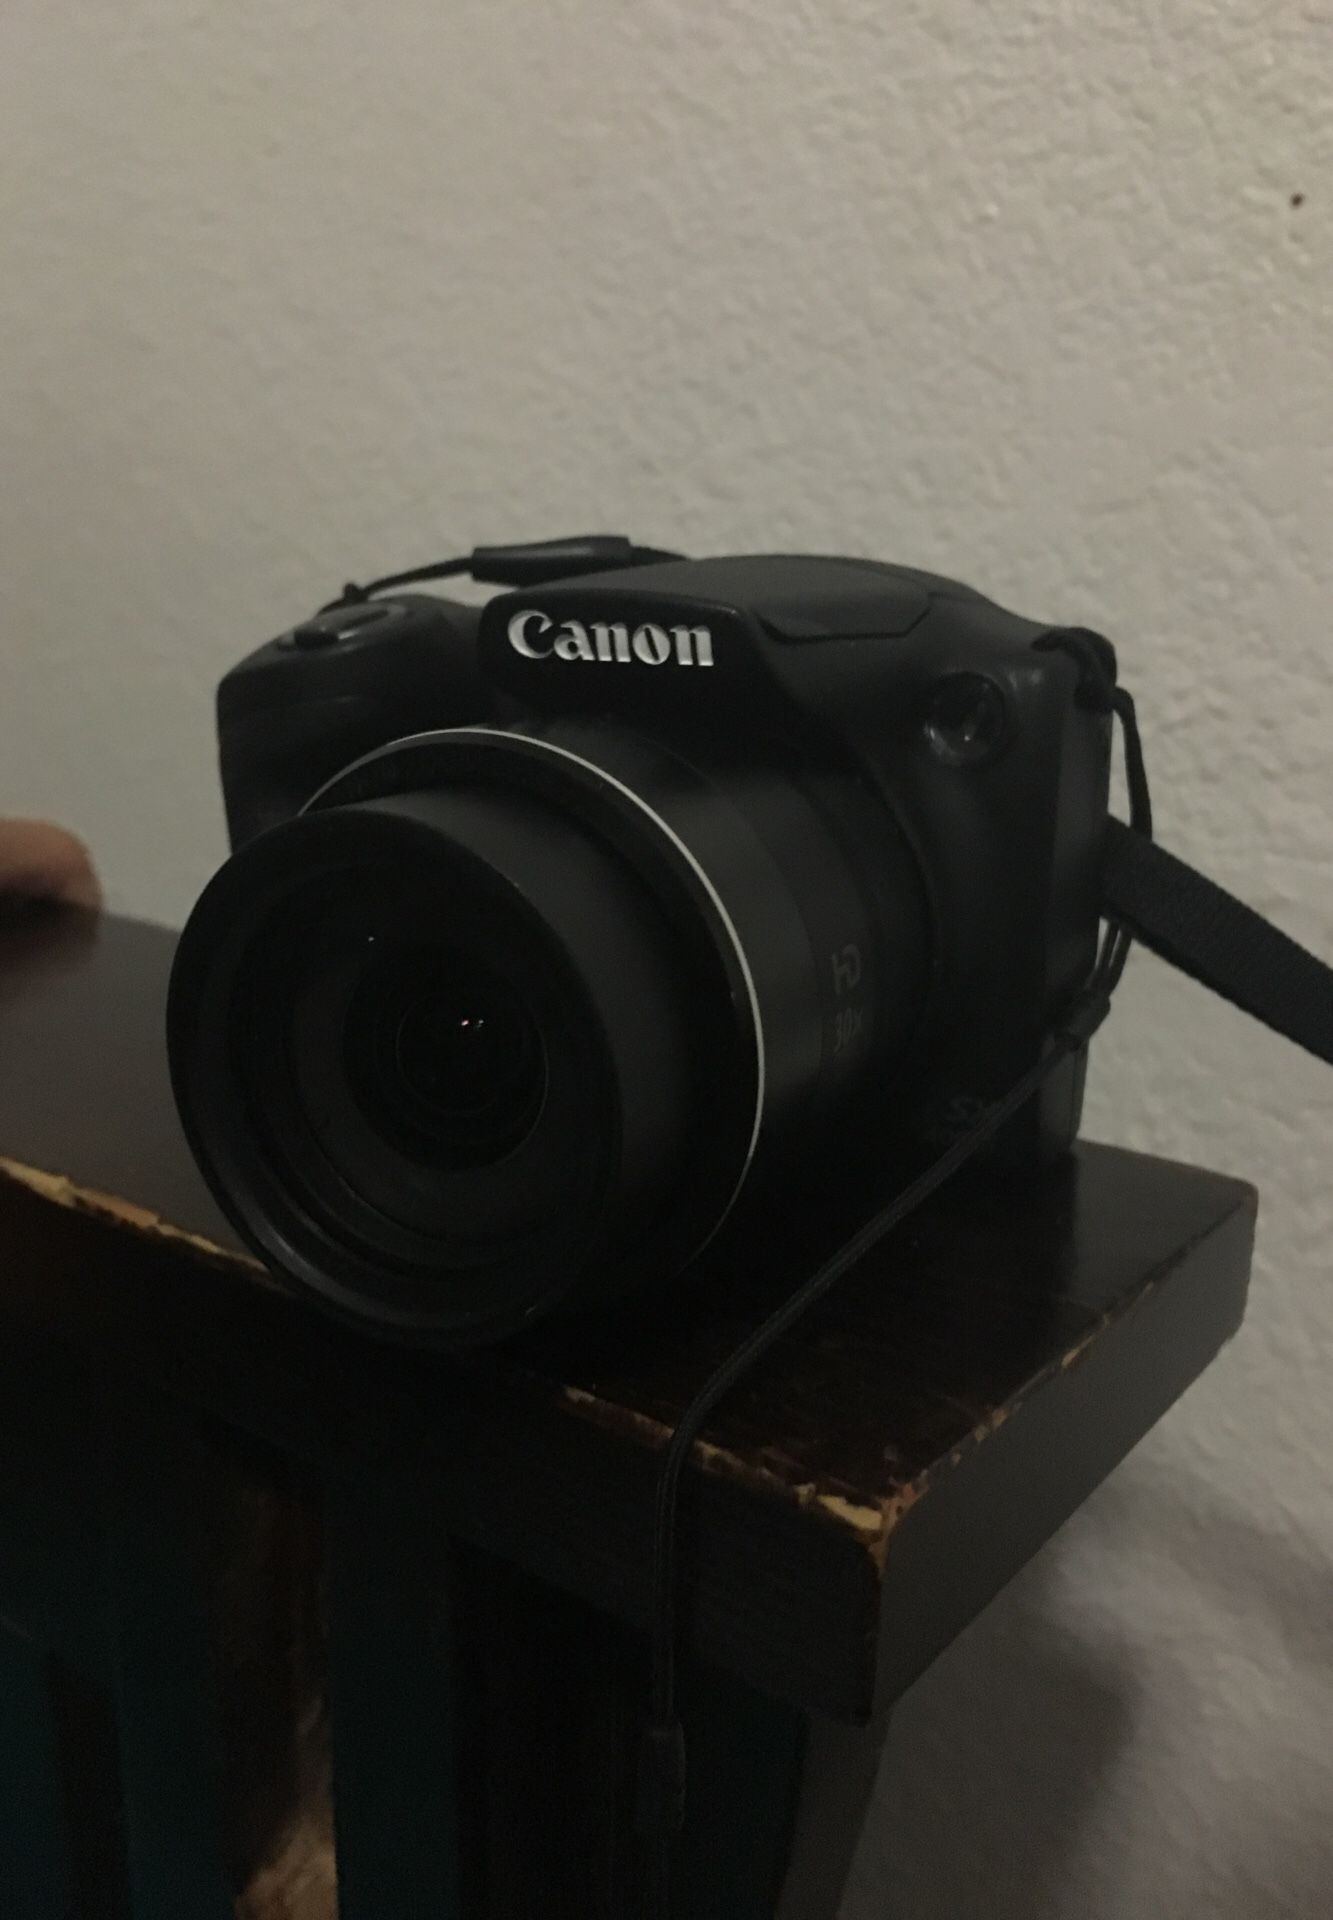 Canon Power shot SX 400 IS good camera